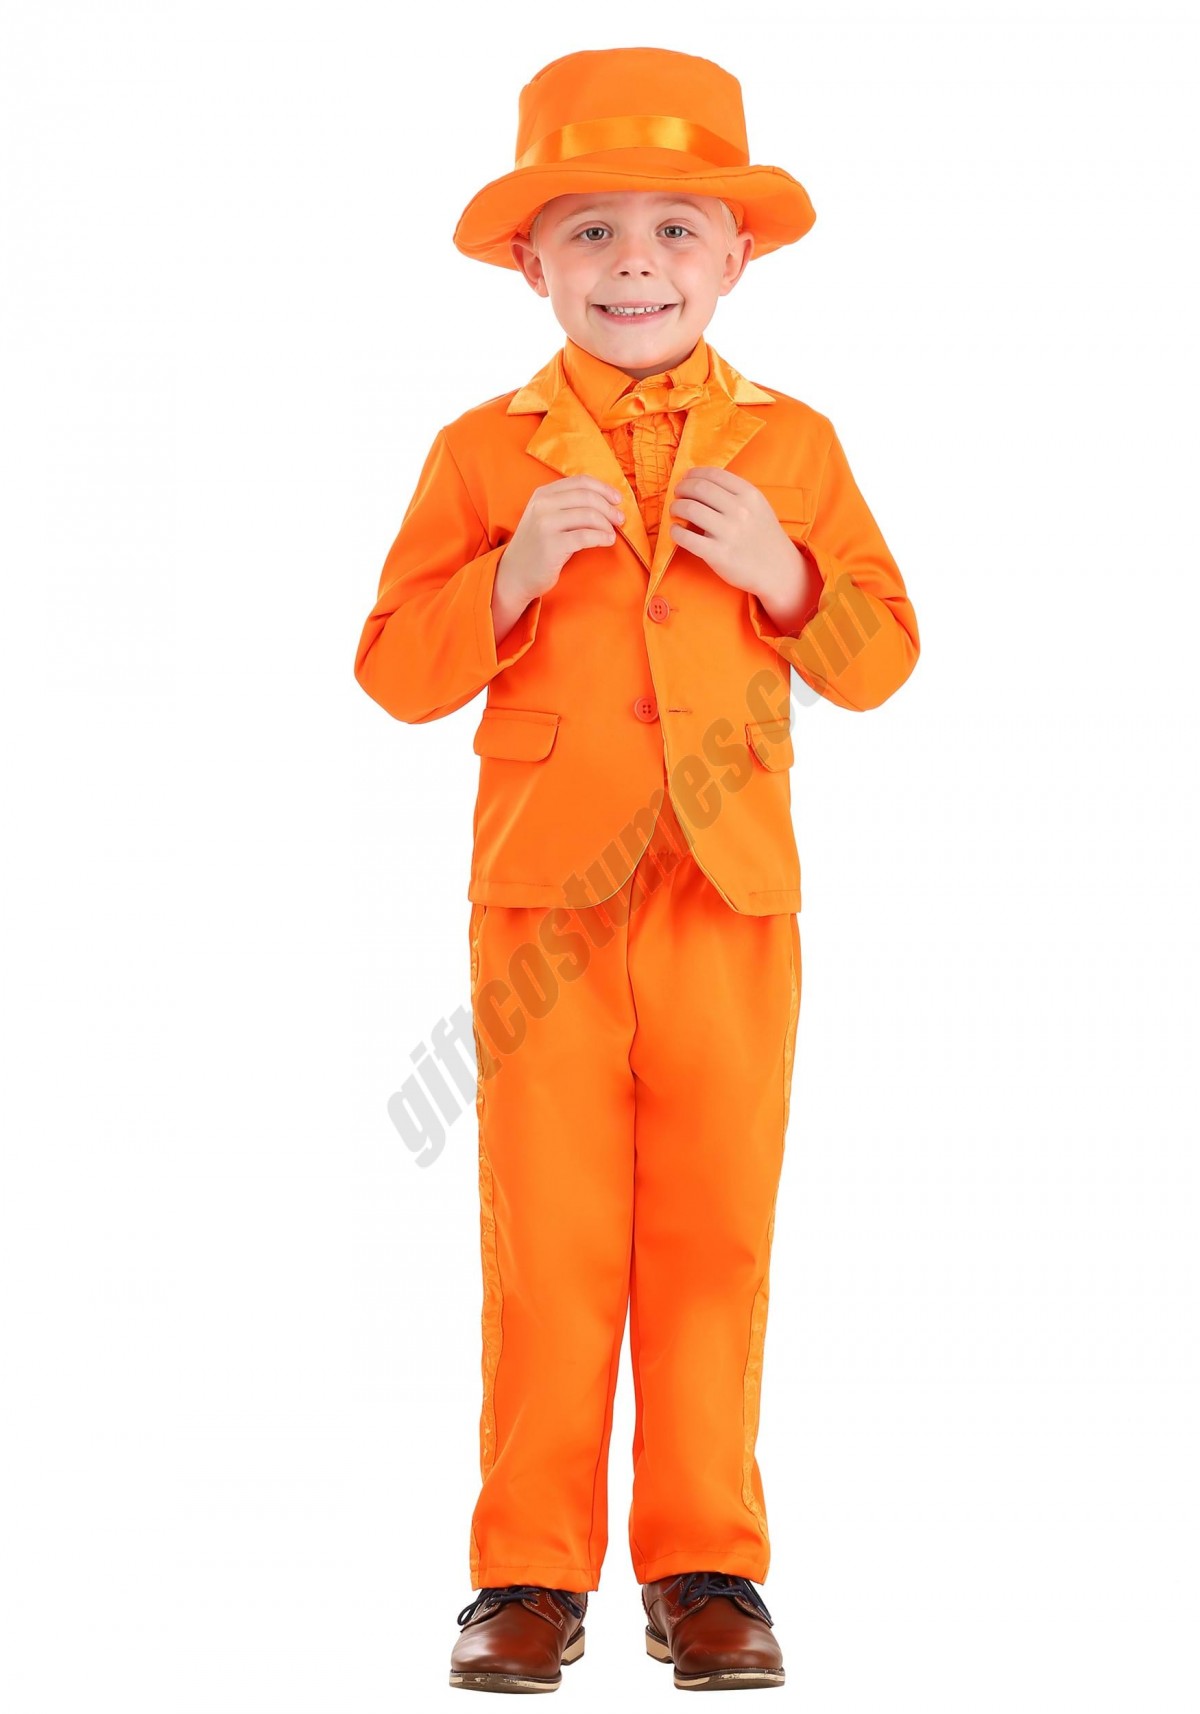 Toddler Orange Tuxedo Costume Promotions - -0